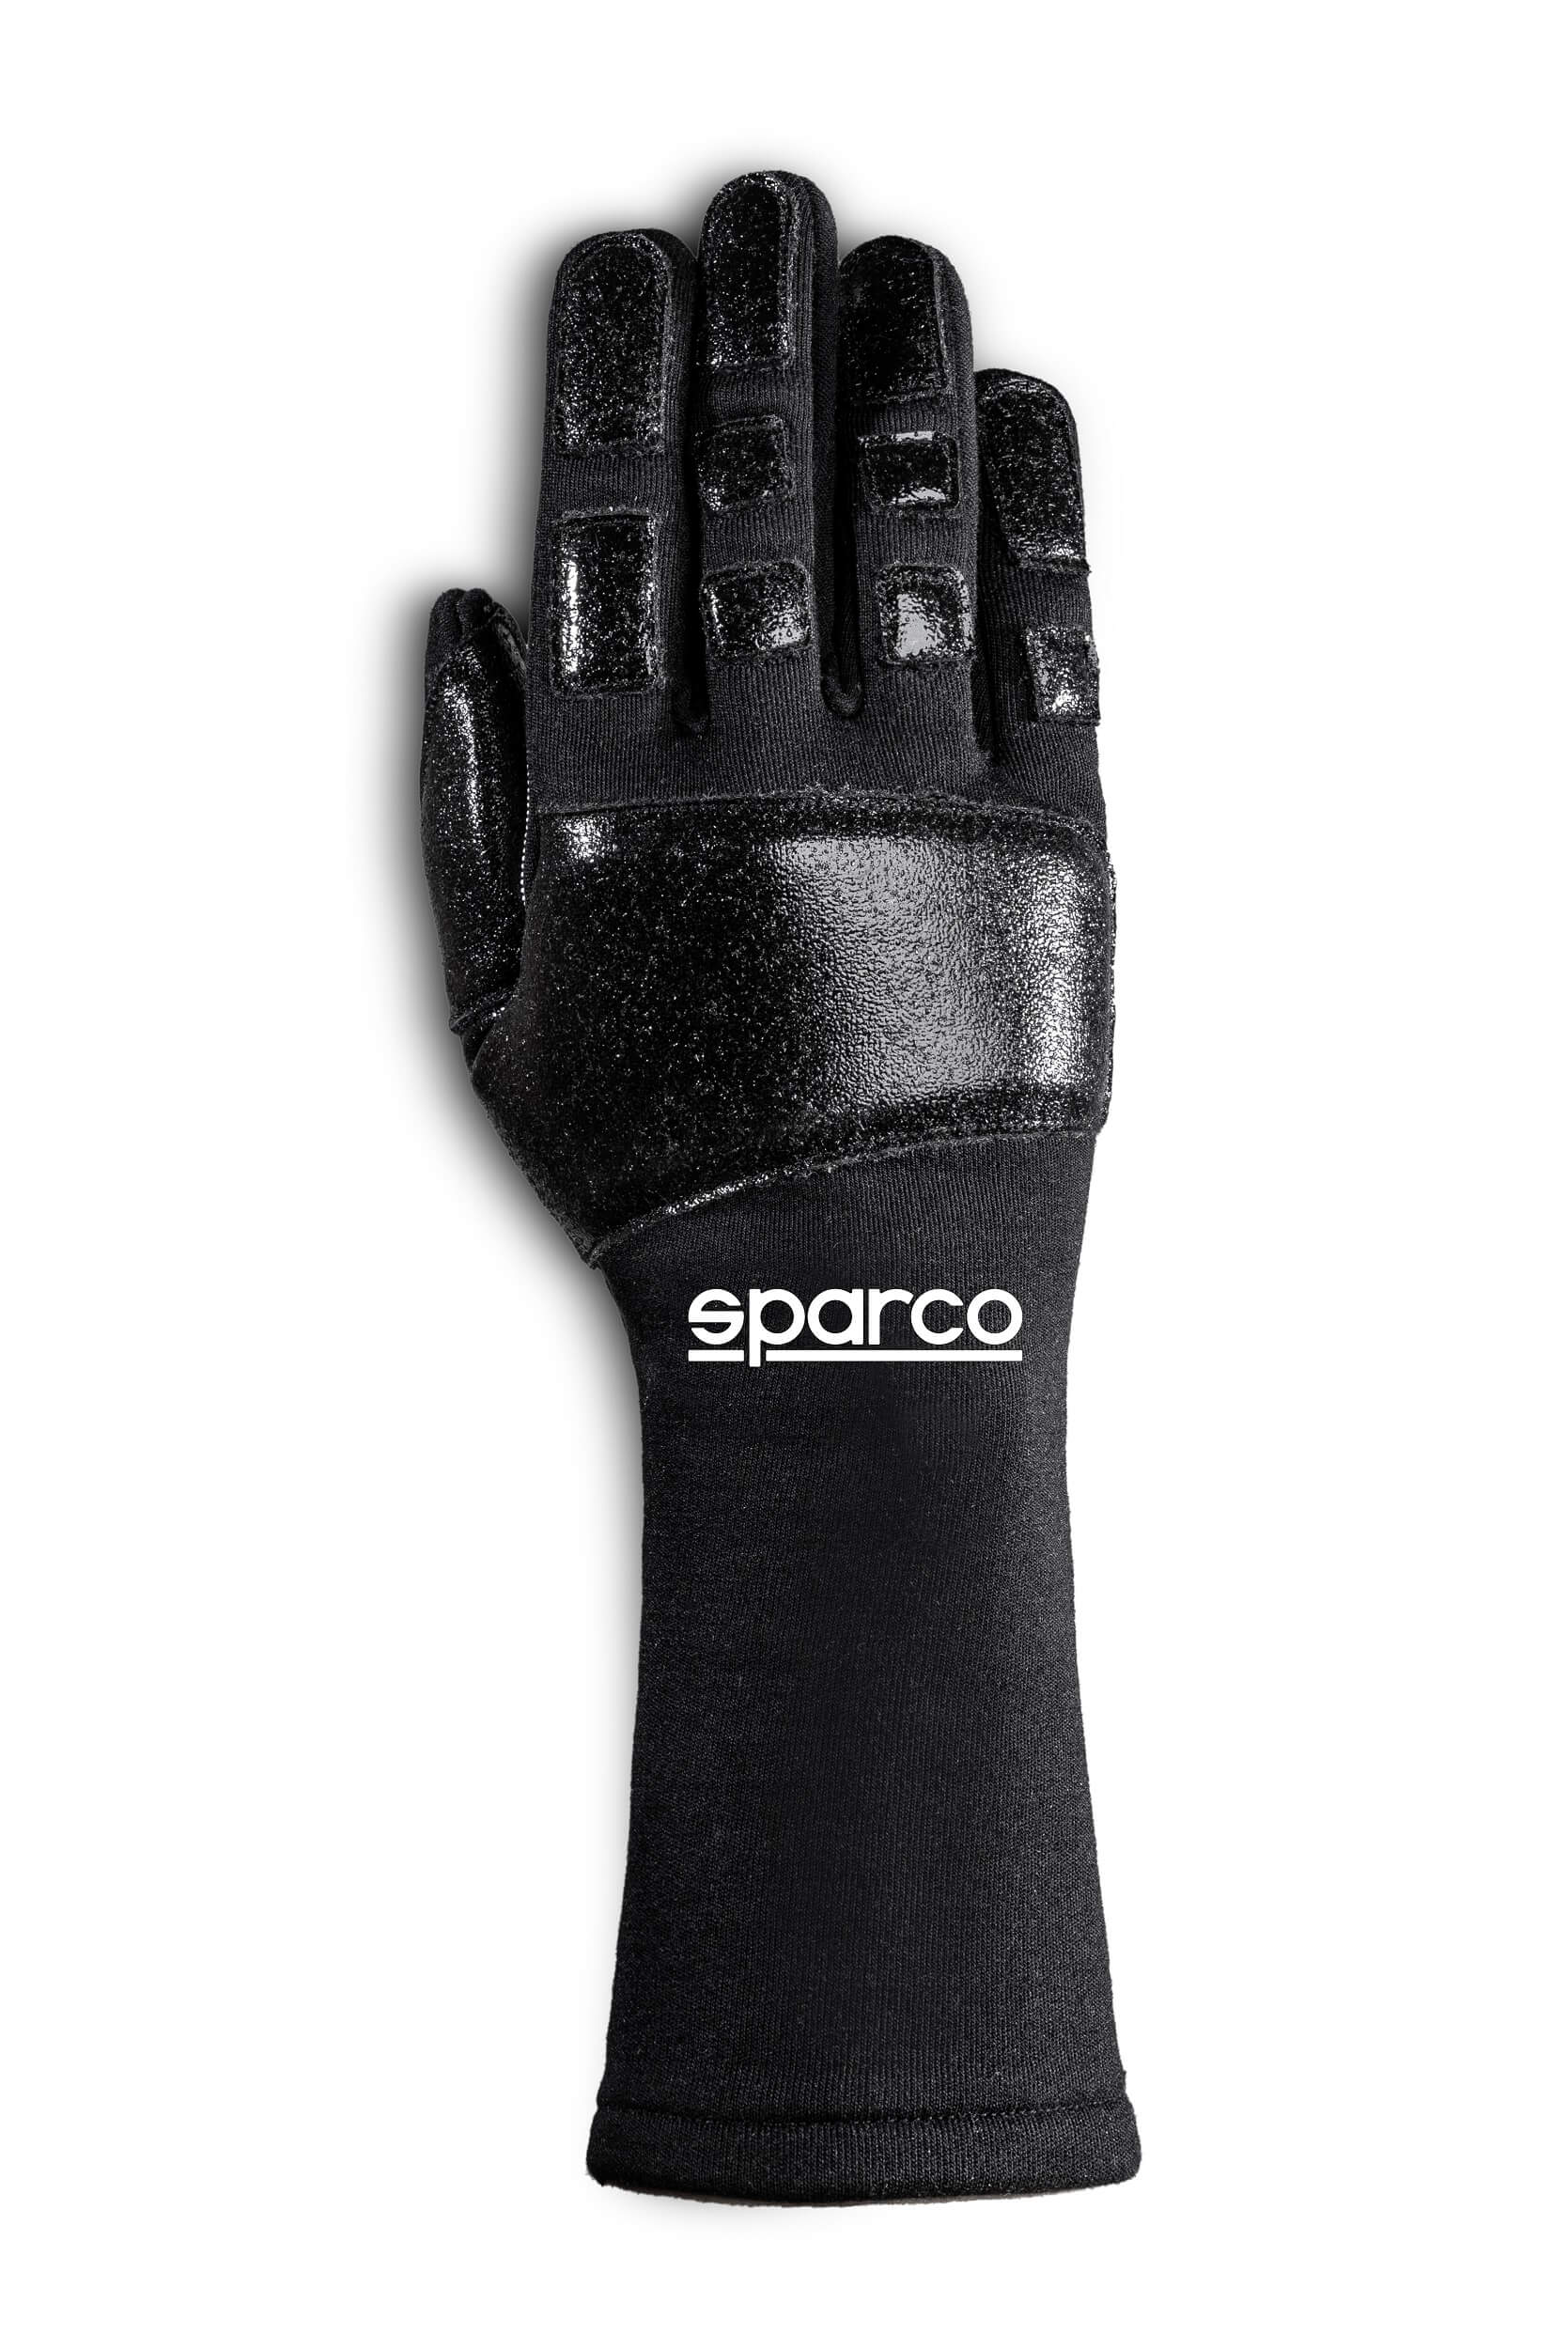 SPARCO 00131812NR TIDE MECA Gloves, NOT FIA, black, size 12 Photo-0 